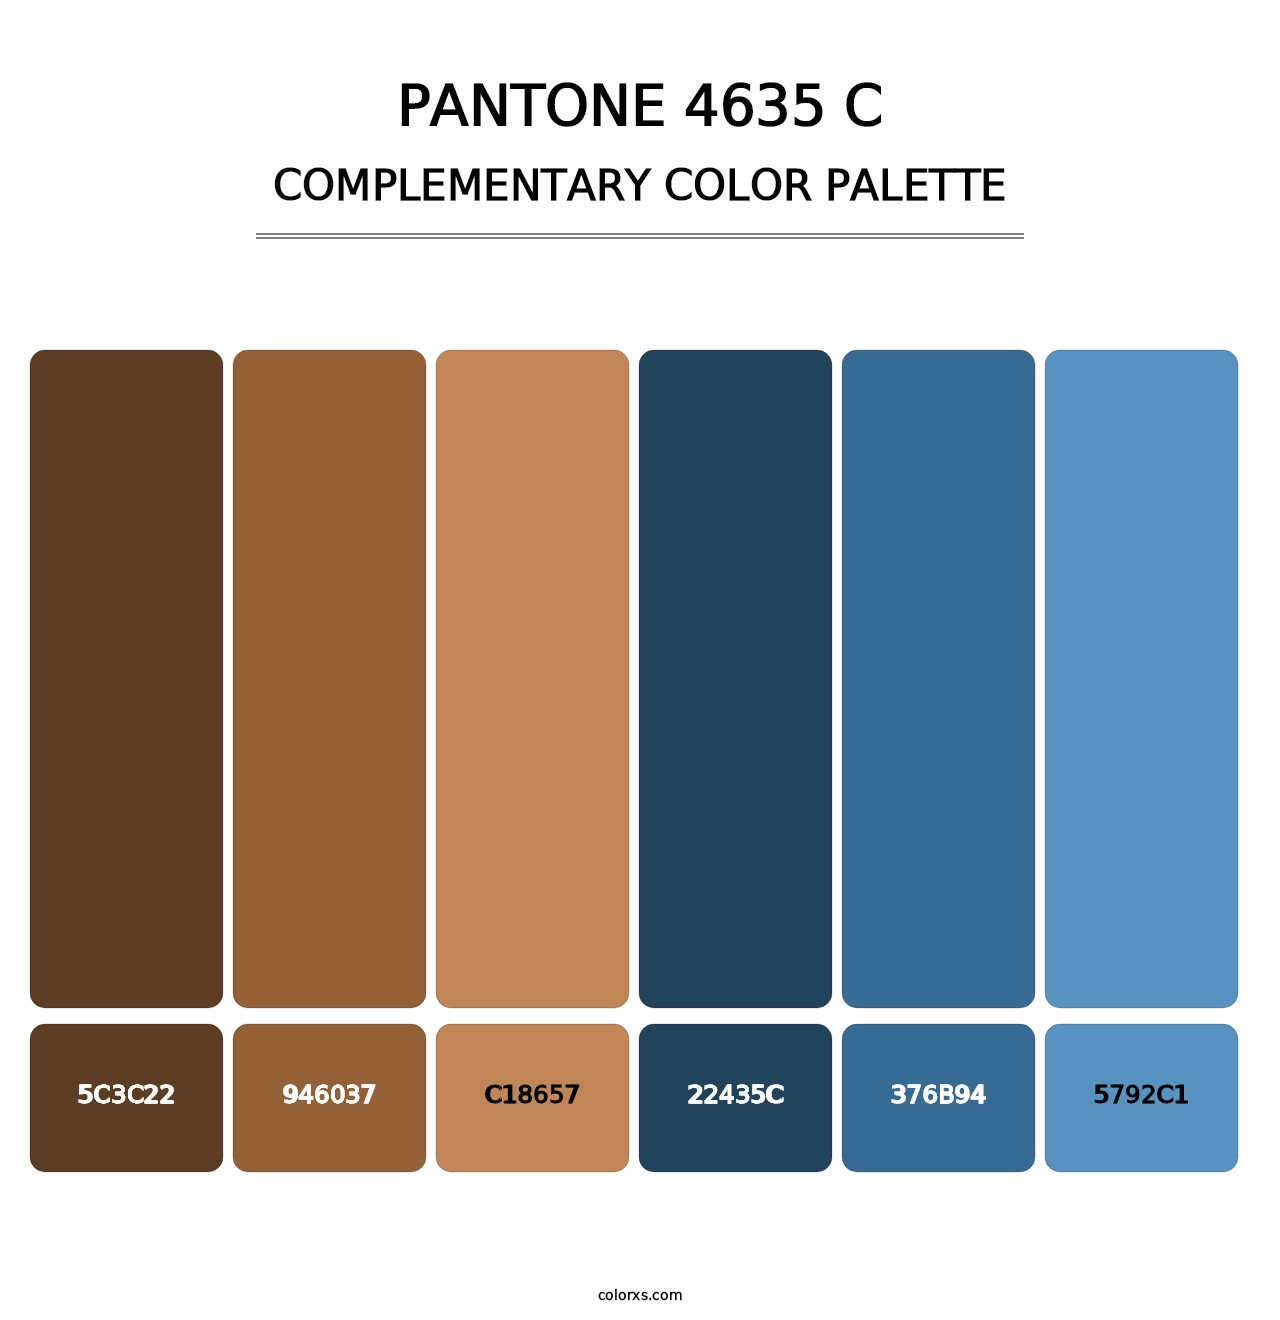 PANTONE 4635 C - Complementary Color Palette